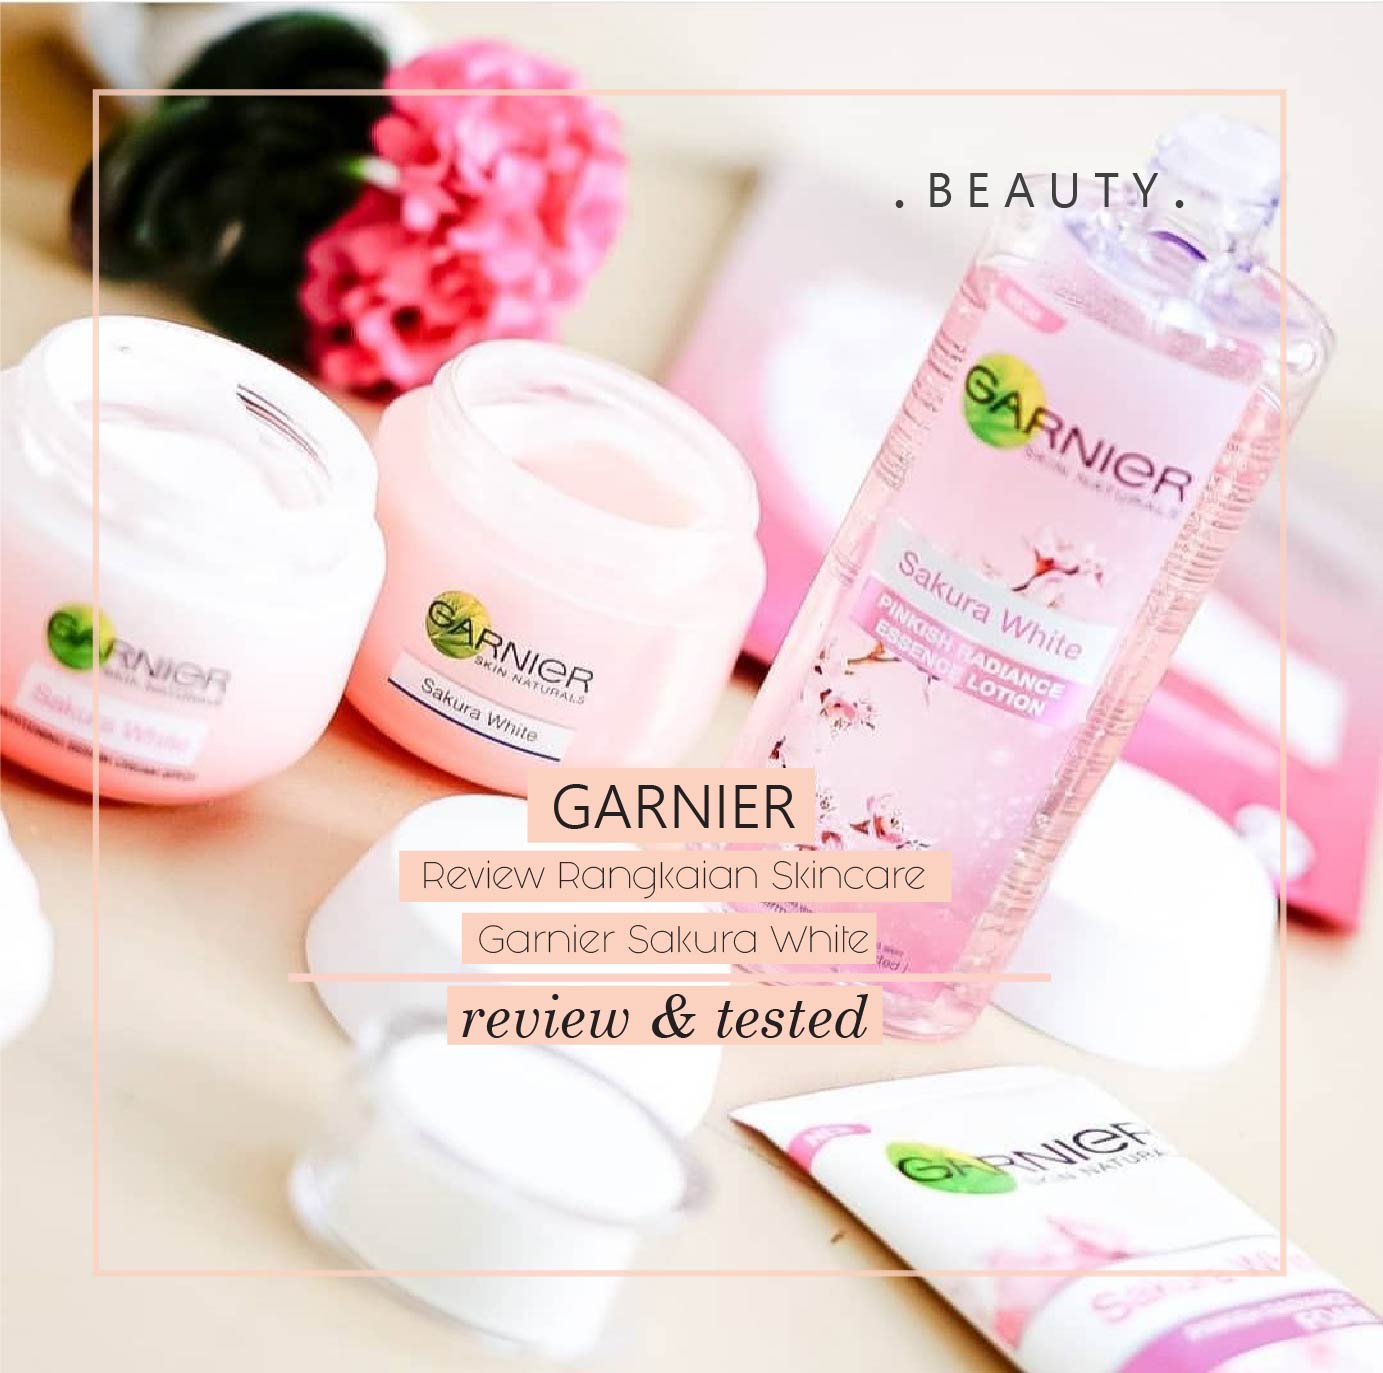 Review Rangkaian Skincare Garnier Sakura White - Di Kulit Kering